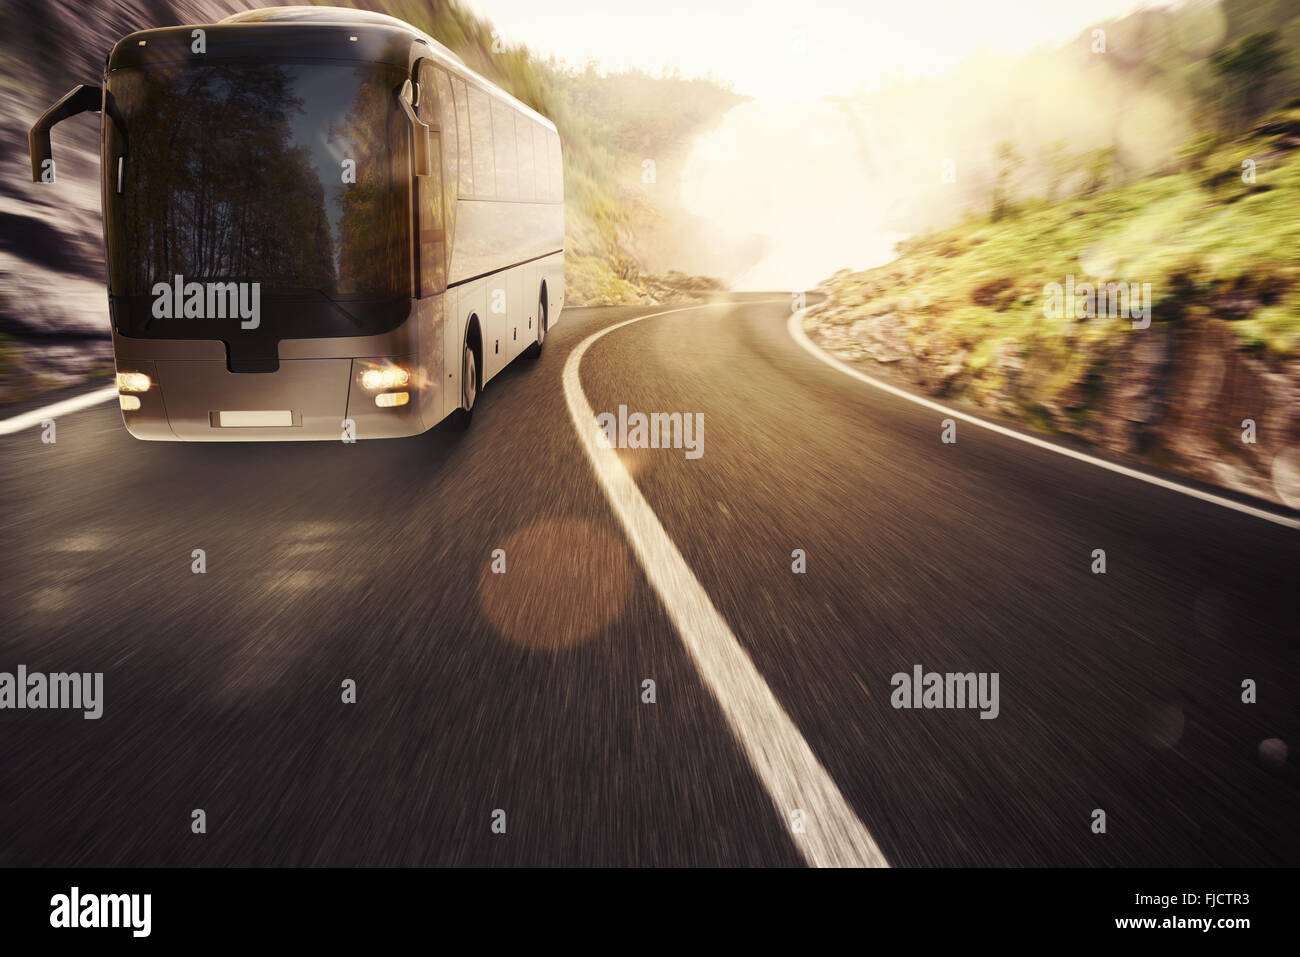 Bus transport Stock Photo